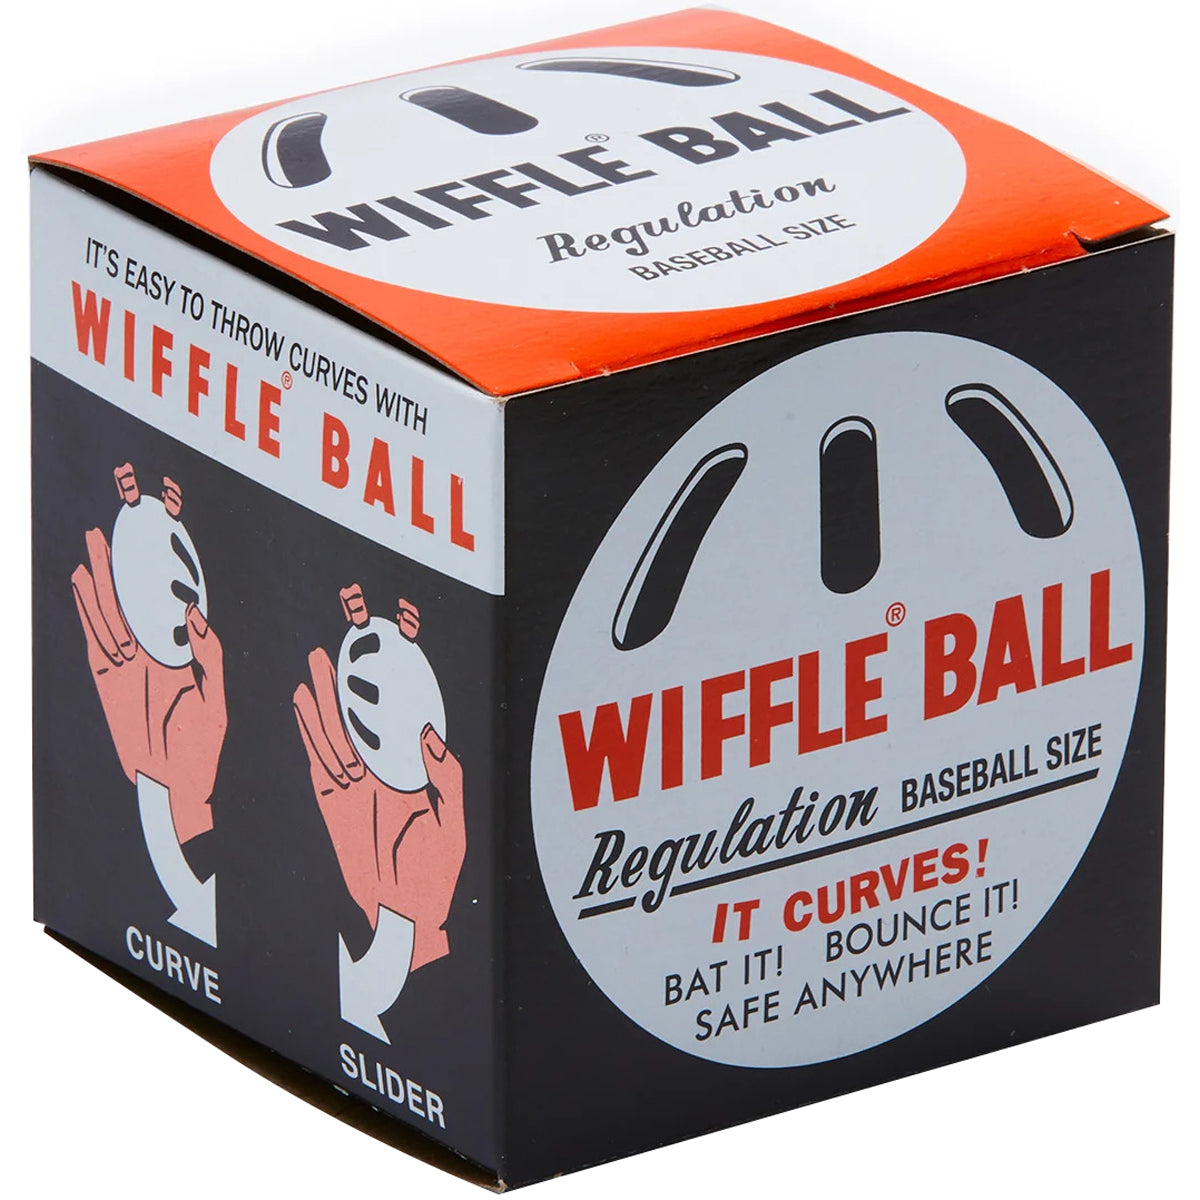 Wiffle Ball 9" Original Regulation Baseball Size Curve Training Plastic Ball Wiffle Ball